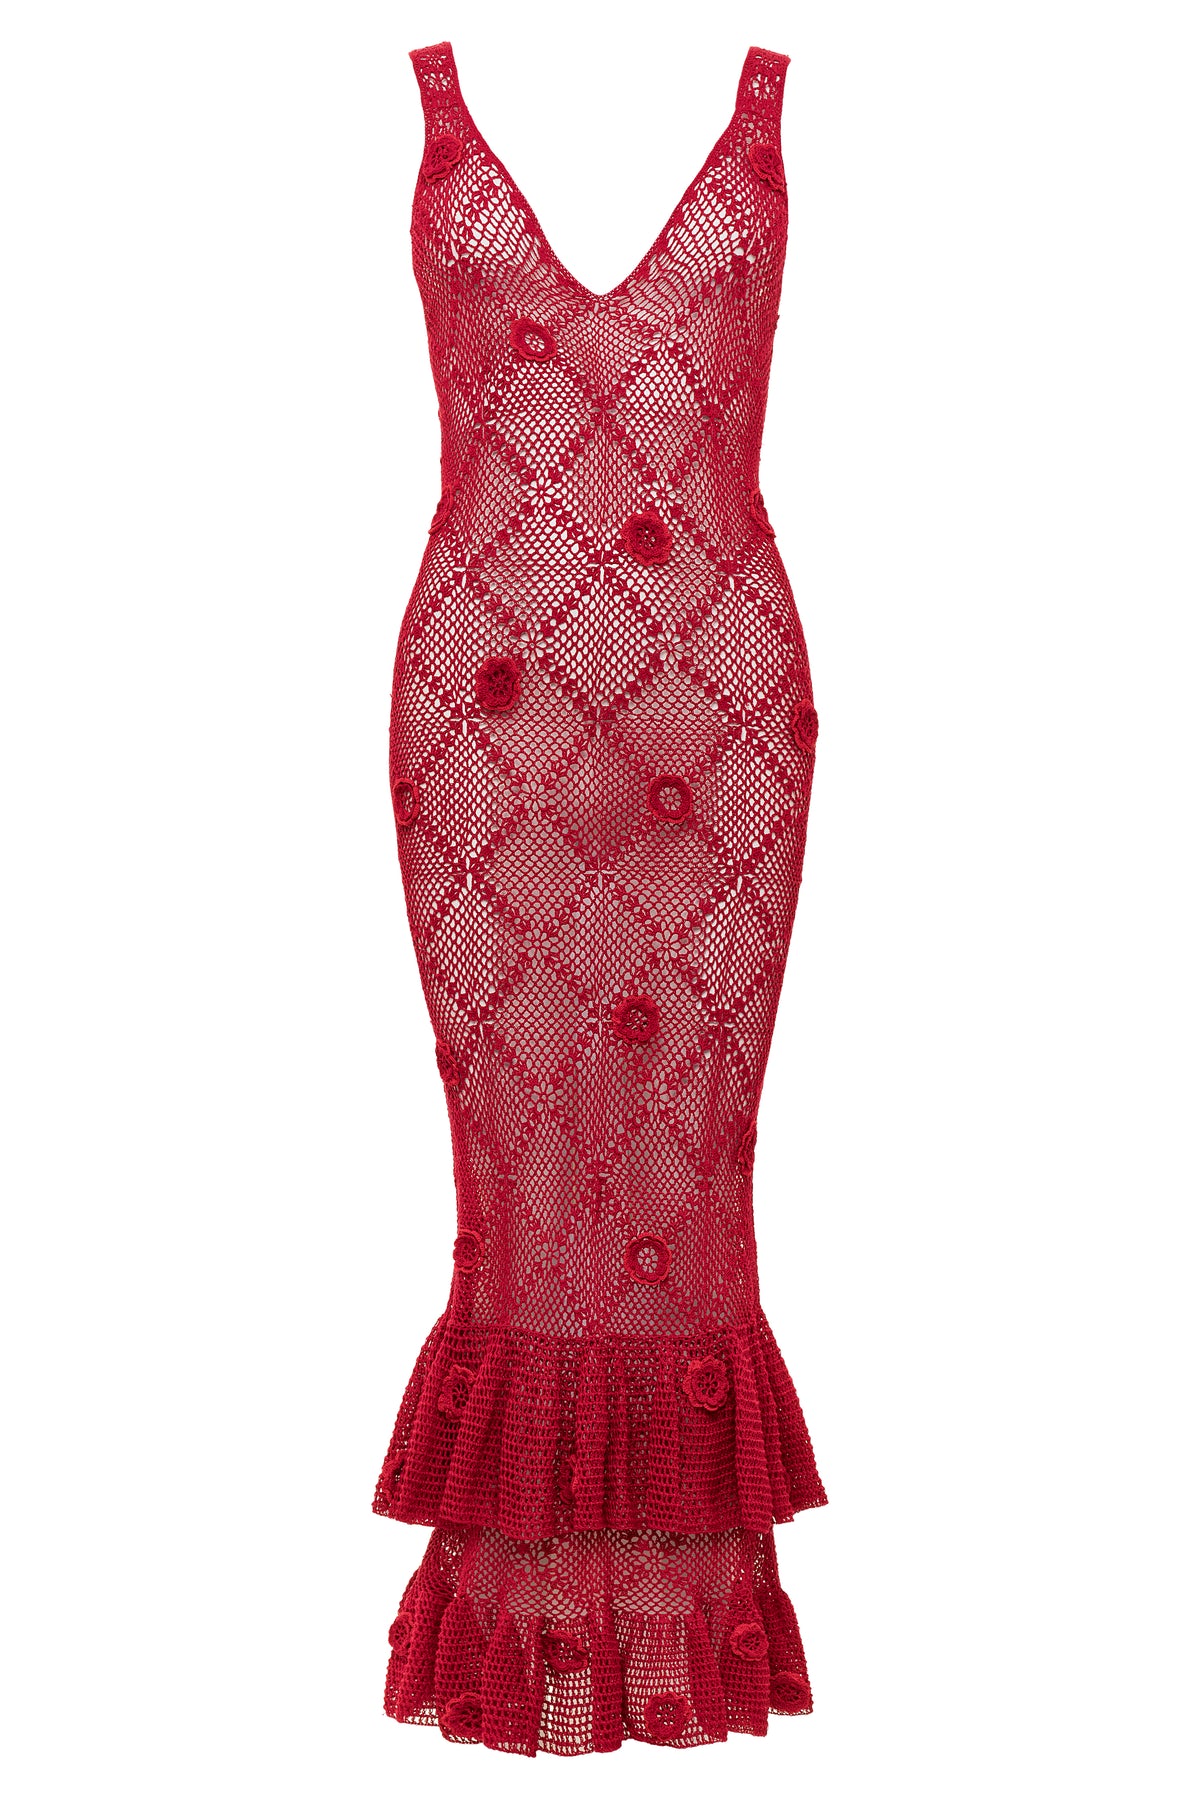 Vani Crochet Dress - Carolina K